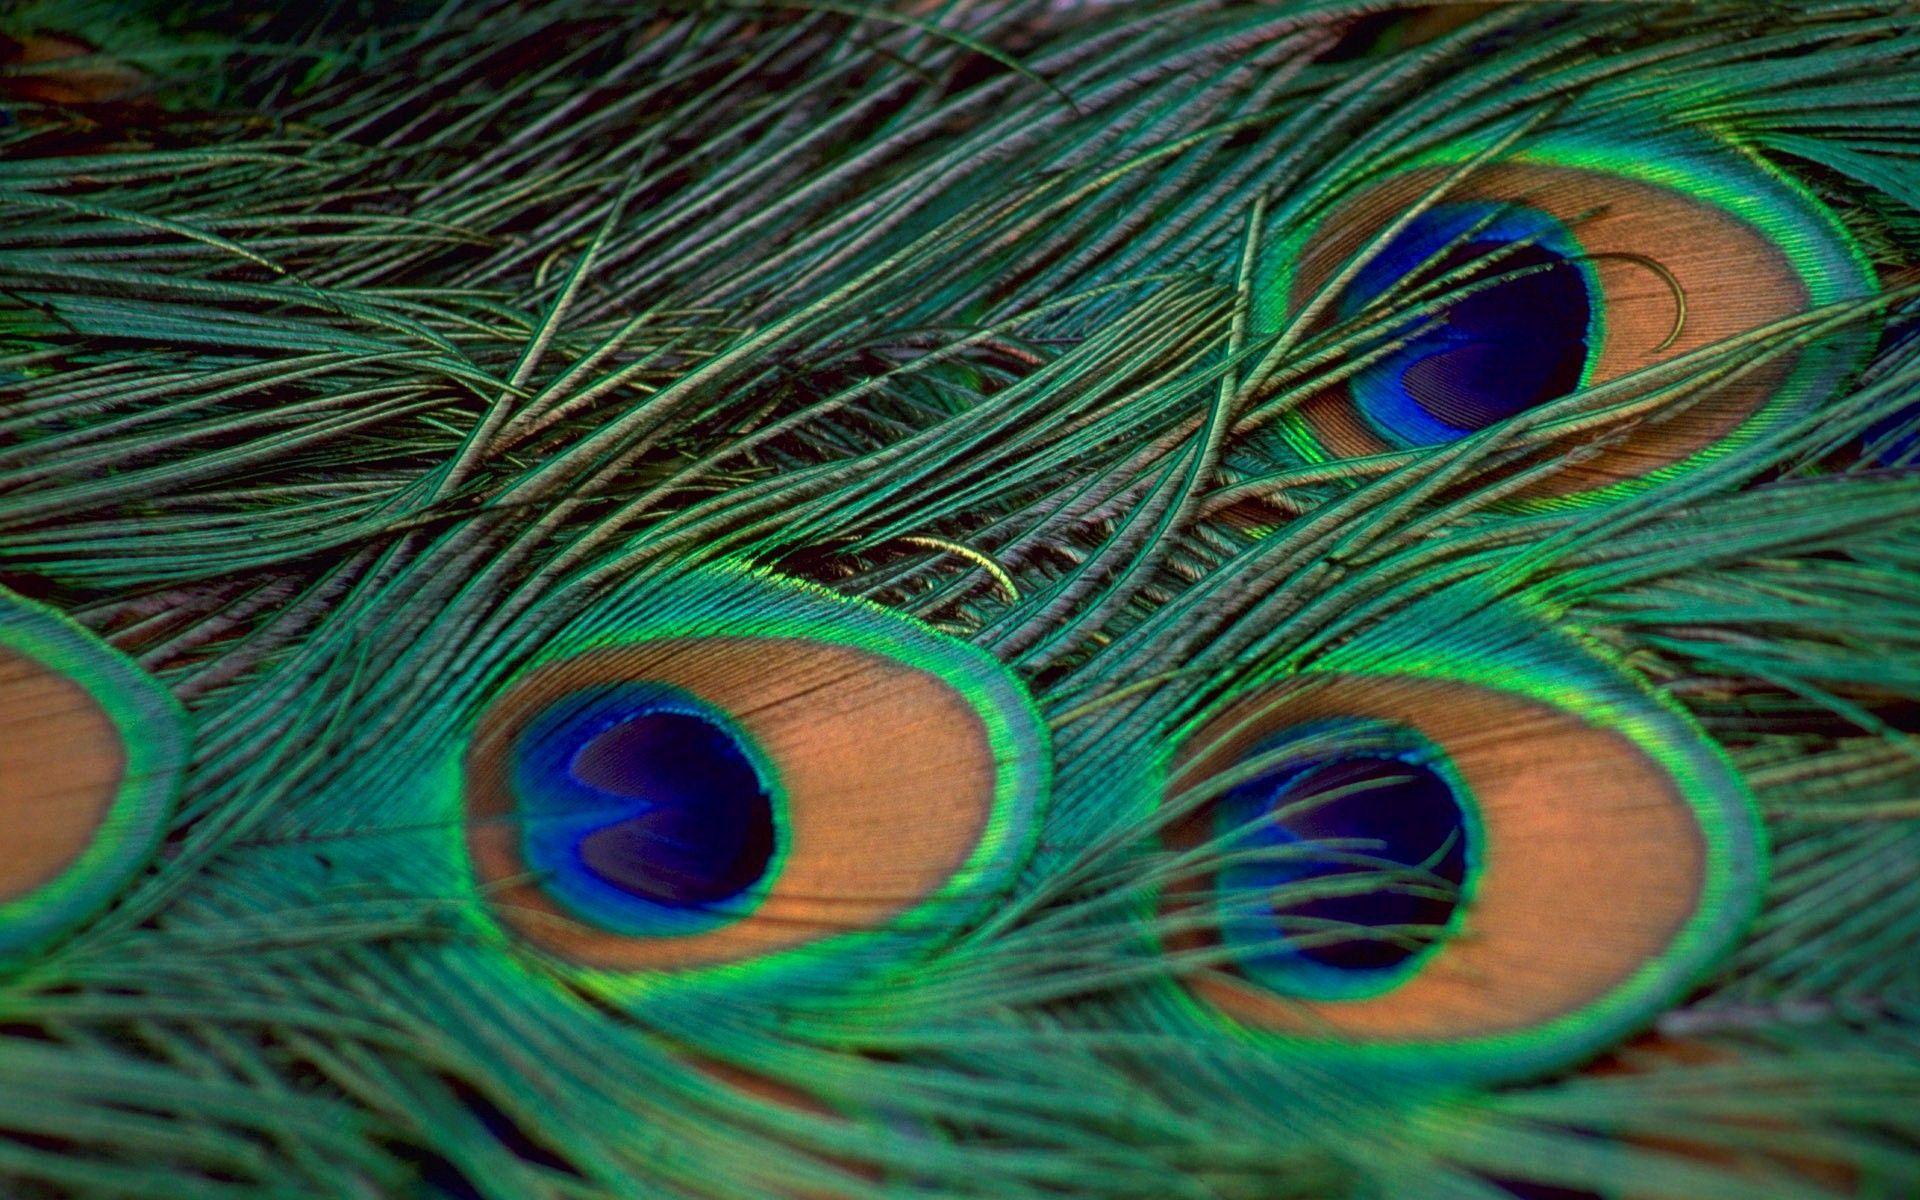 PEACOCK, S *❤*. Peacock image